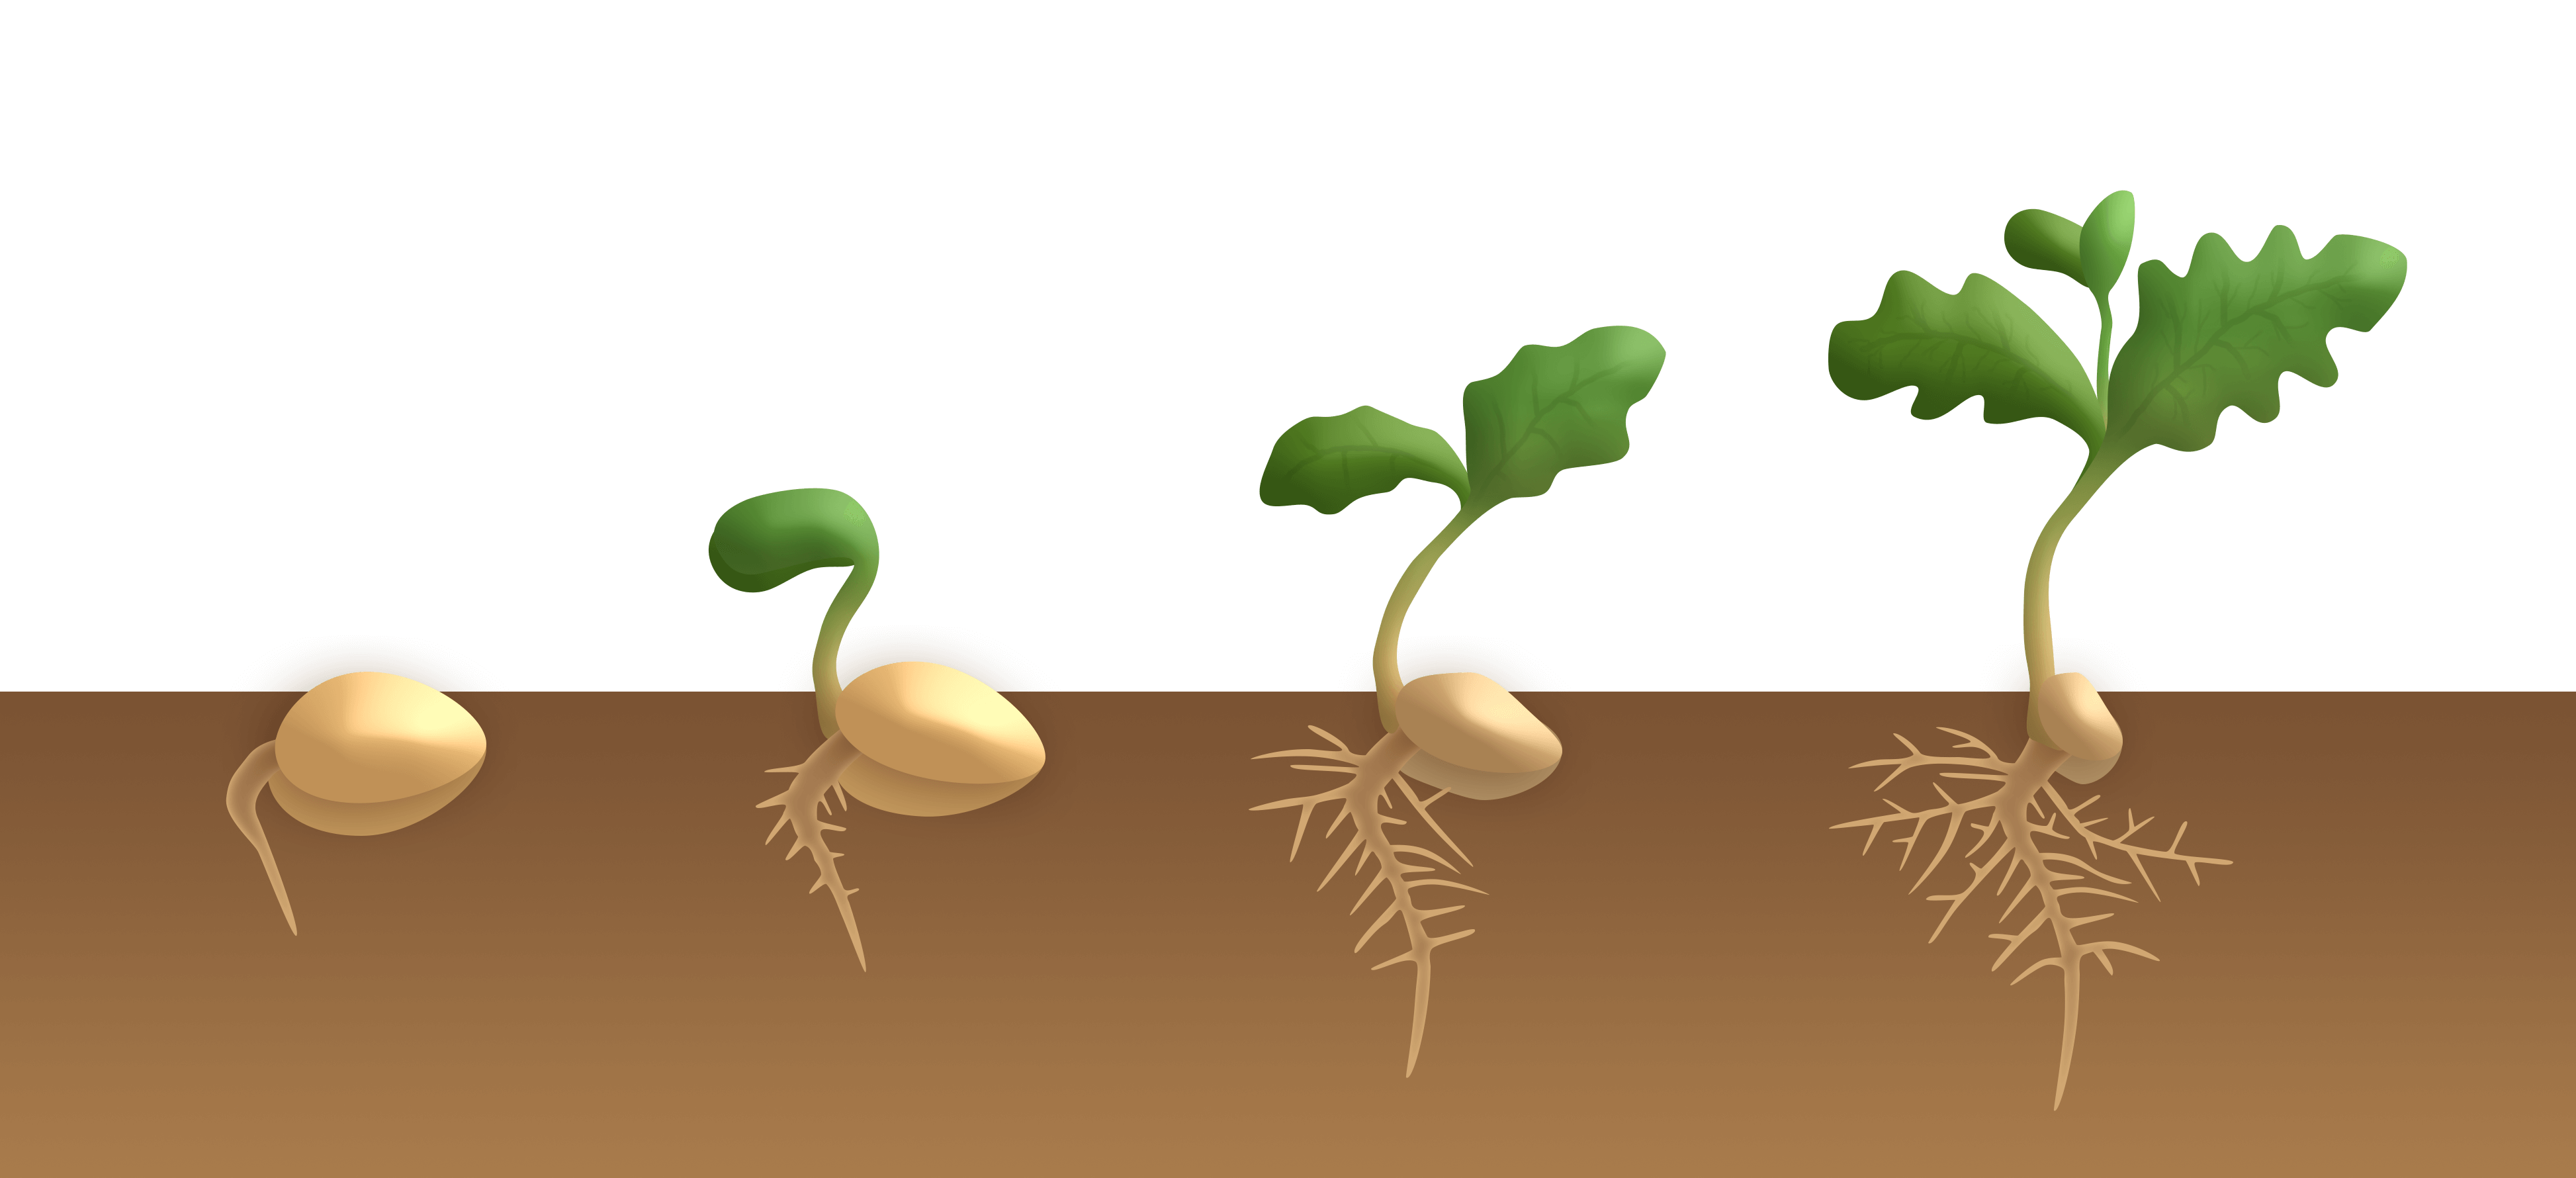 germination of seeds